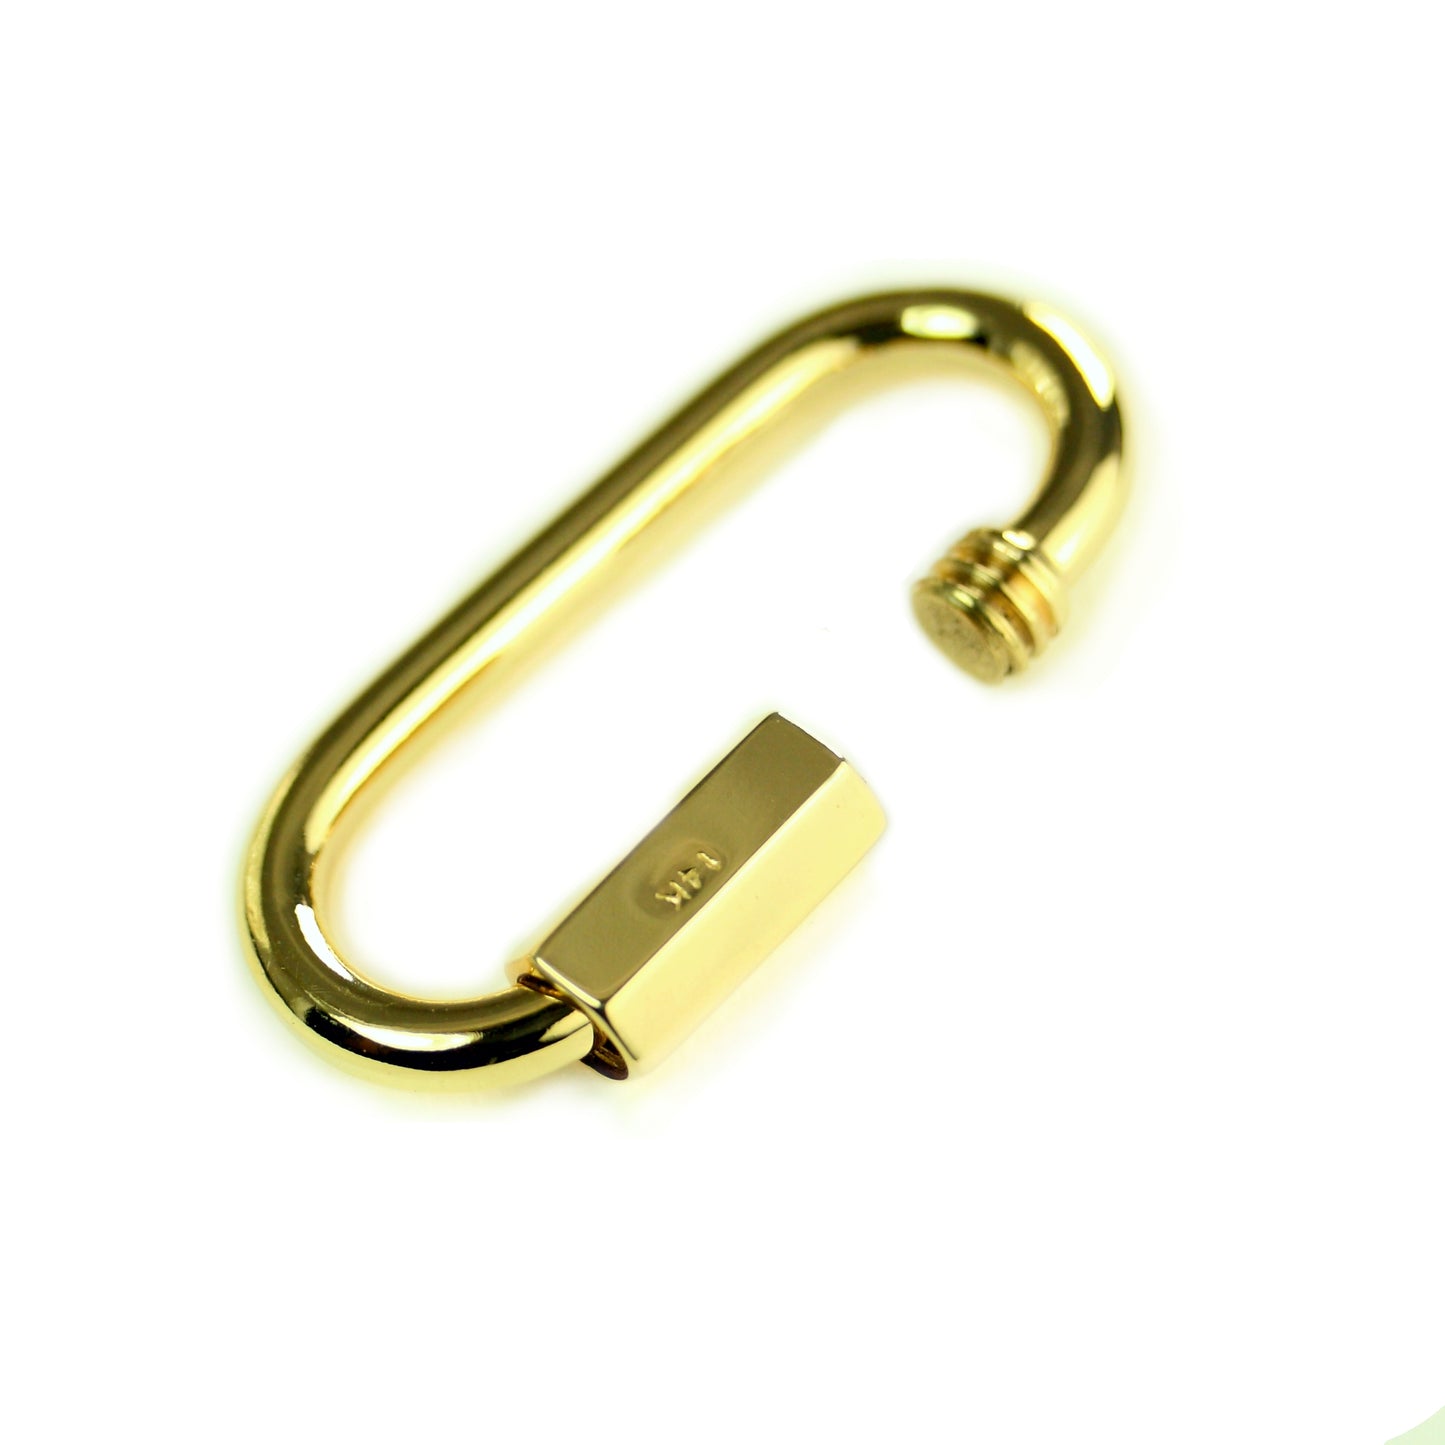 solid 14 karat yellow gold miniature quick link lock carabiner open position